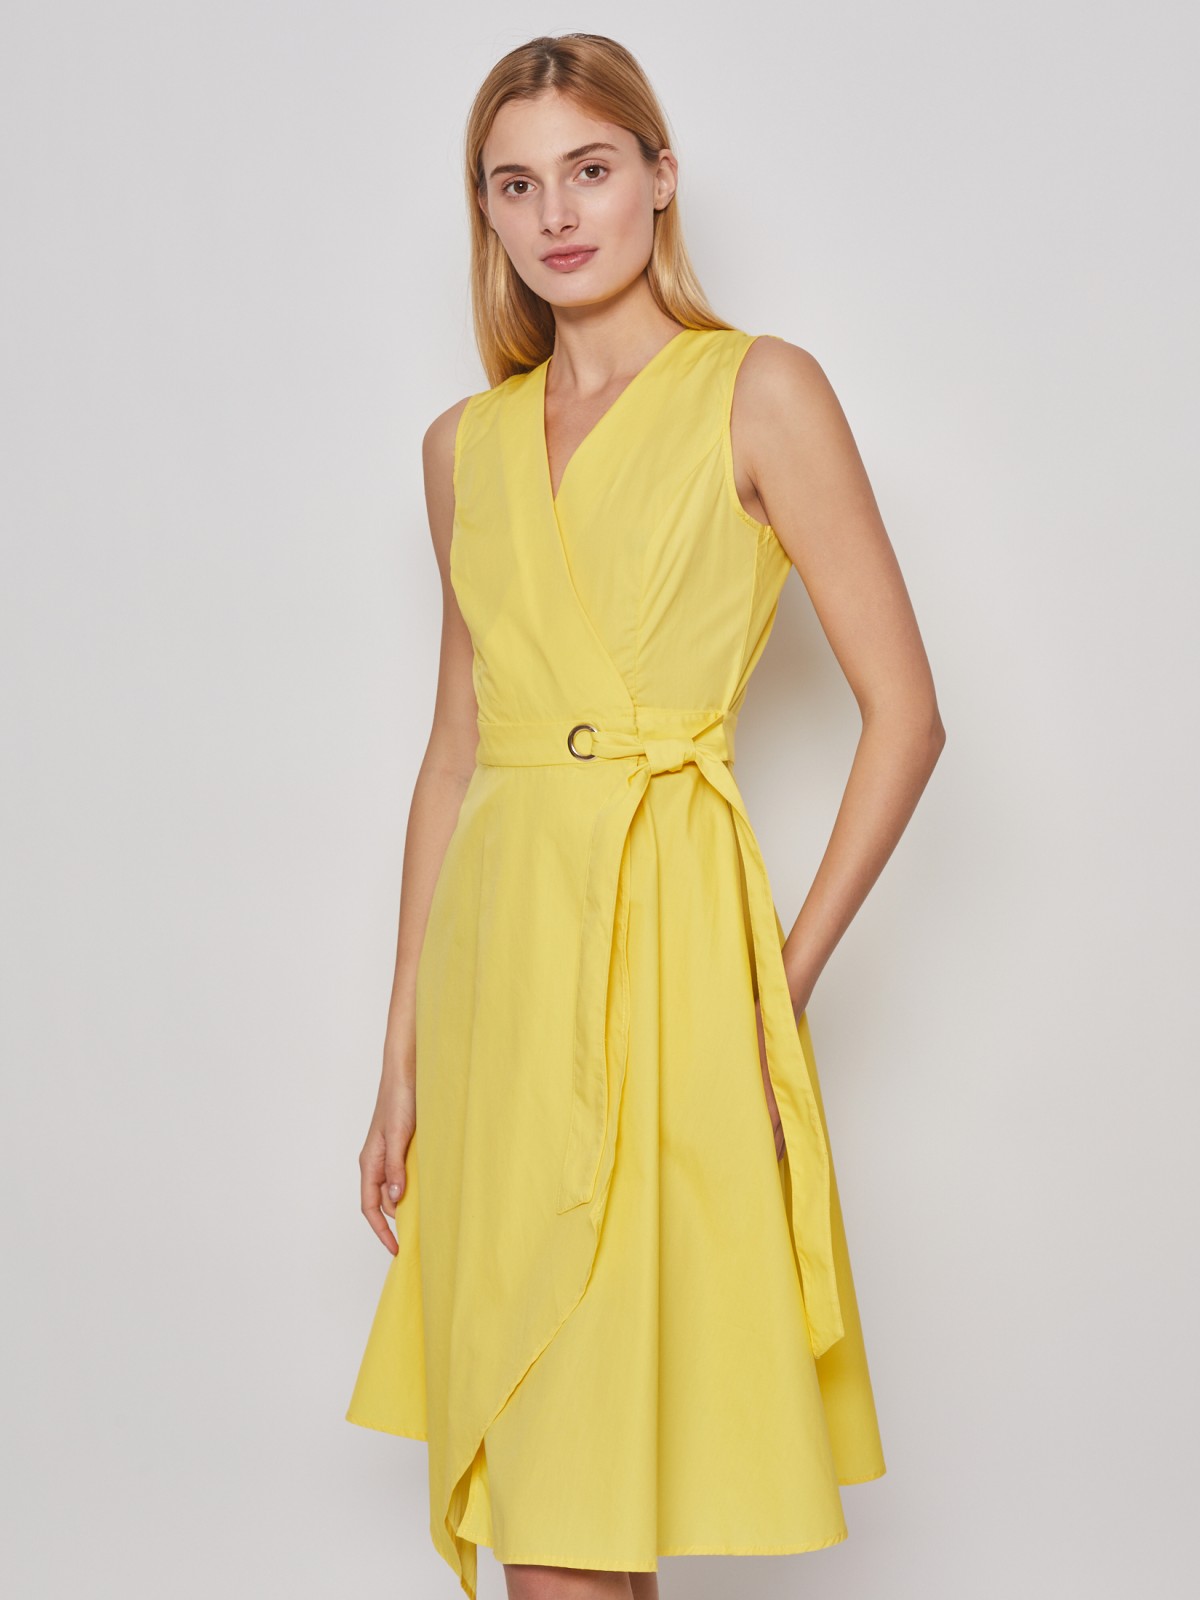 Платье zolla 022248239653, цвет желтый, размер XS - фото 2